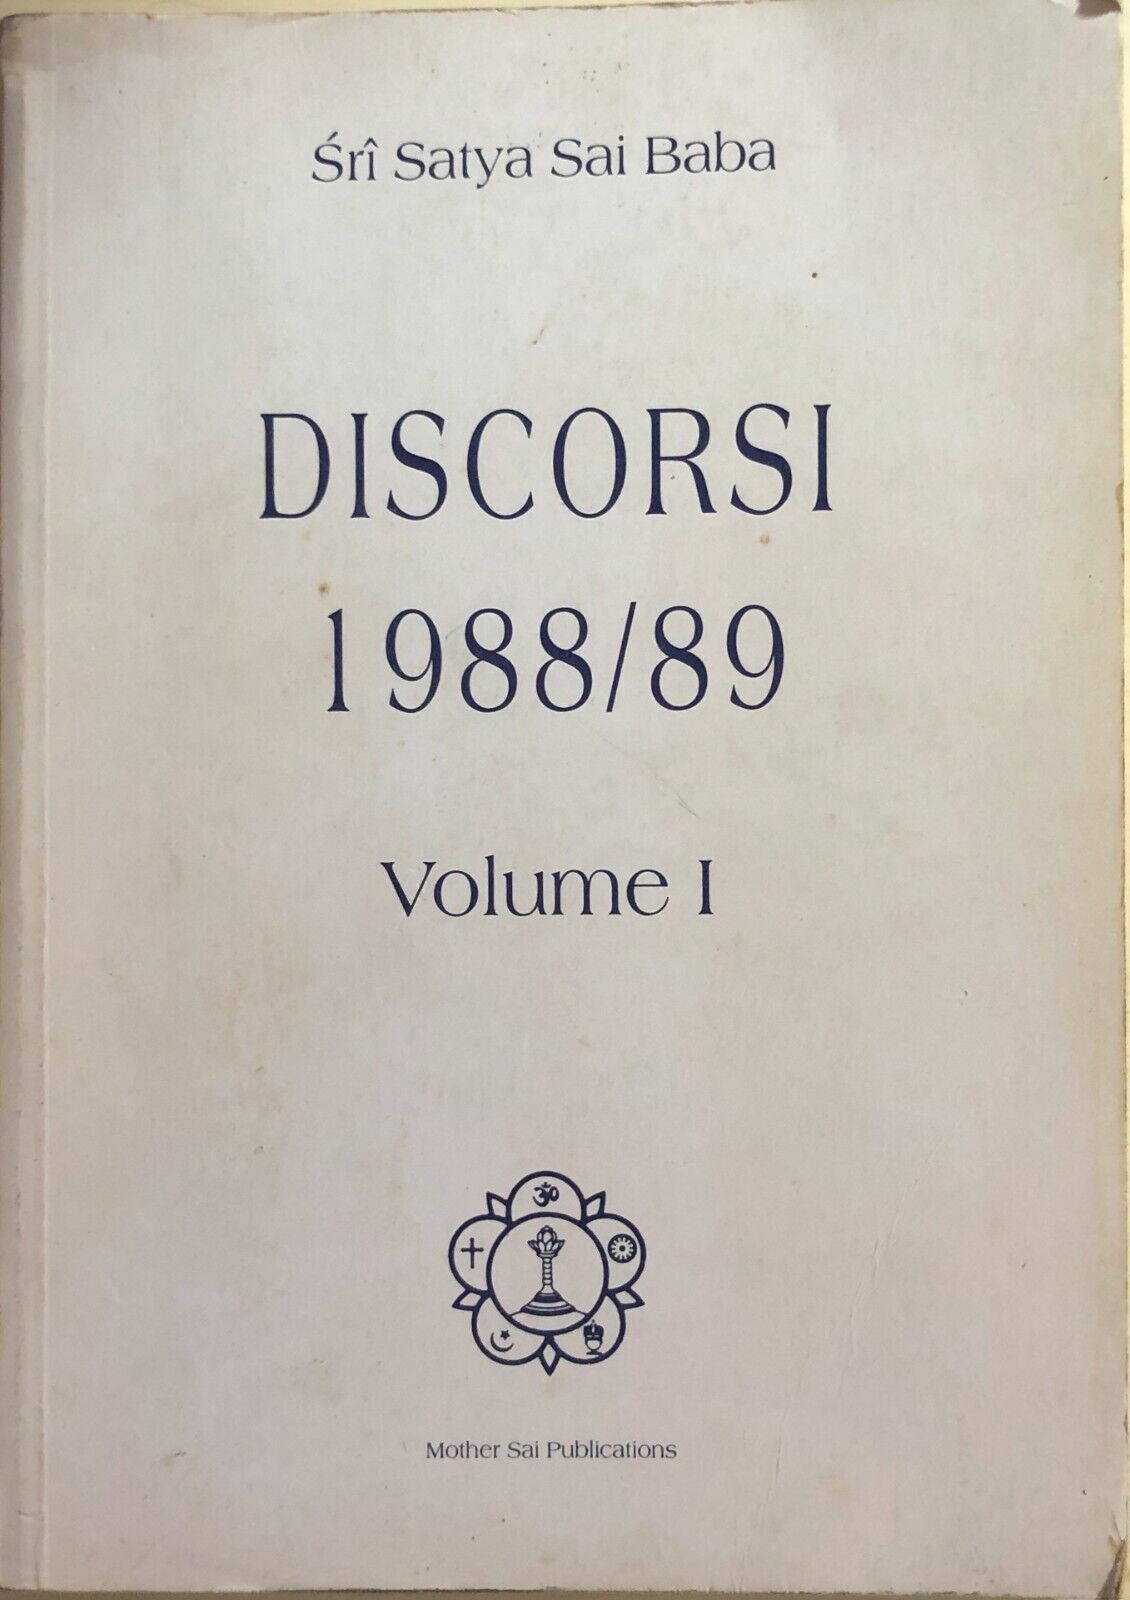 I discorsi 1988/89 Vol.1 di Sri Satya Sai Baba, 1990, Mother Sai Publications